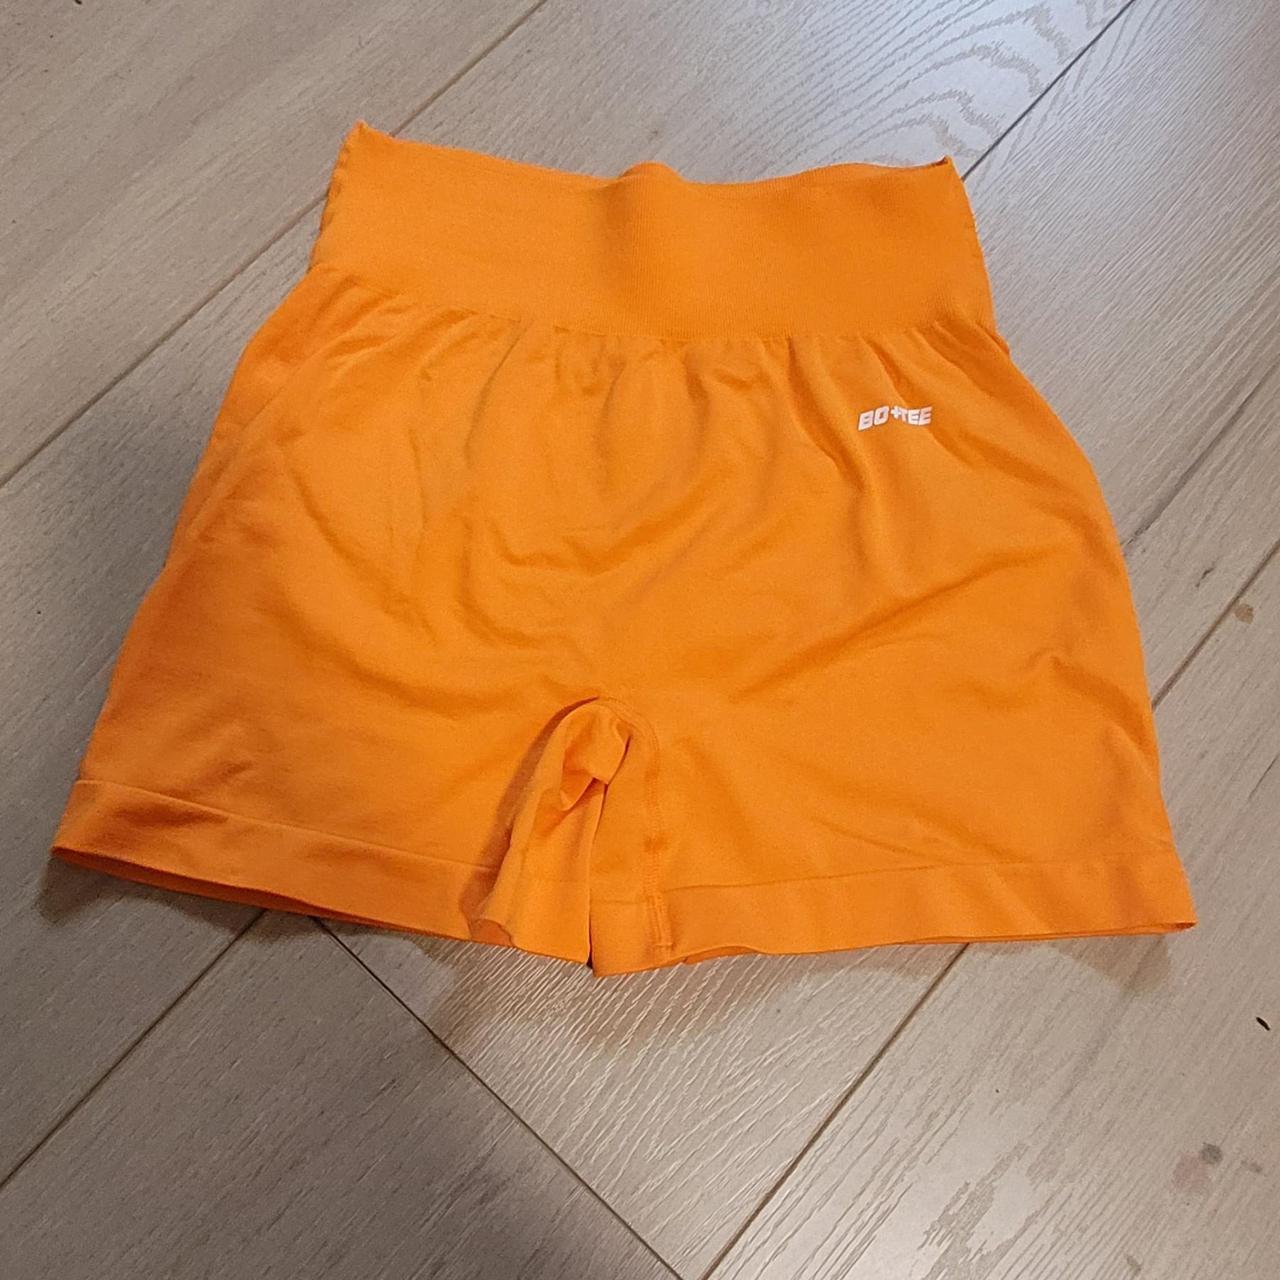 Aloye Women's Orange Shorts (3)